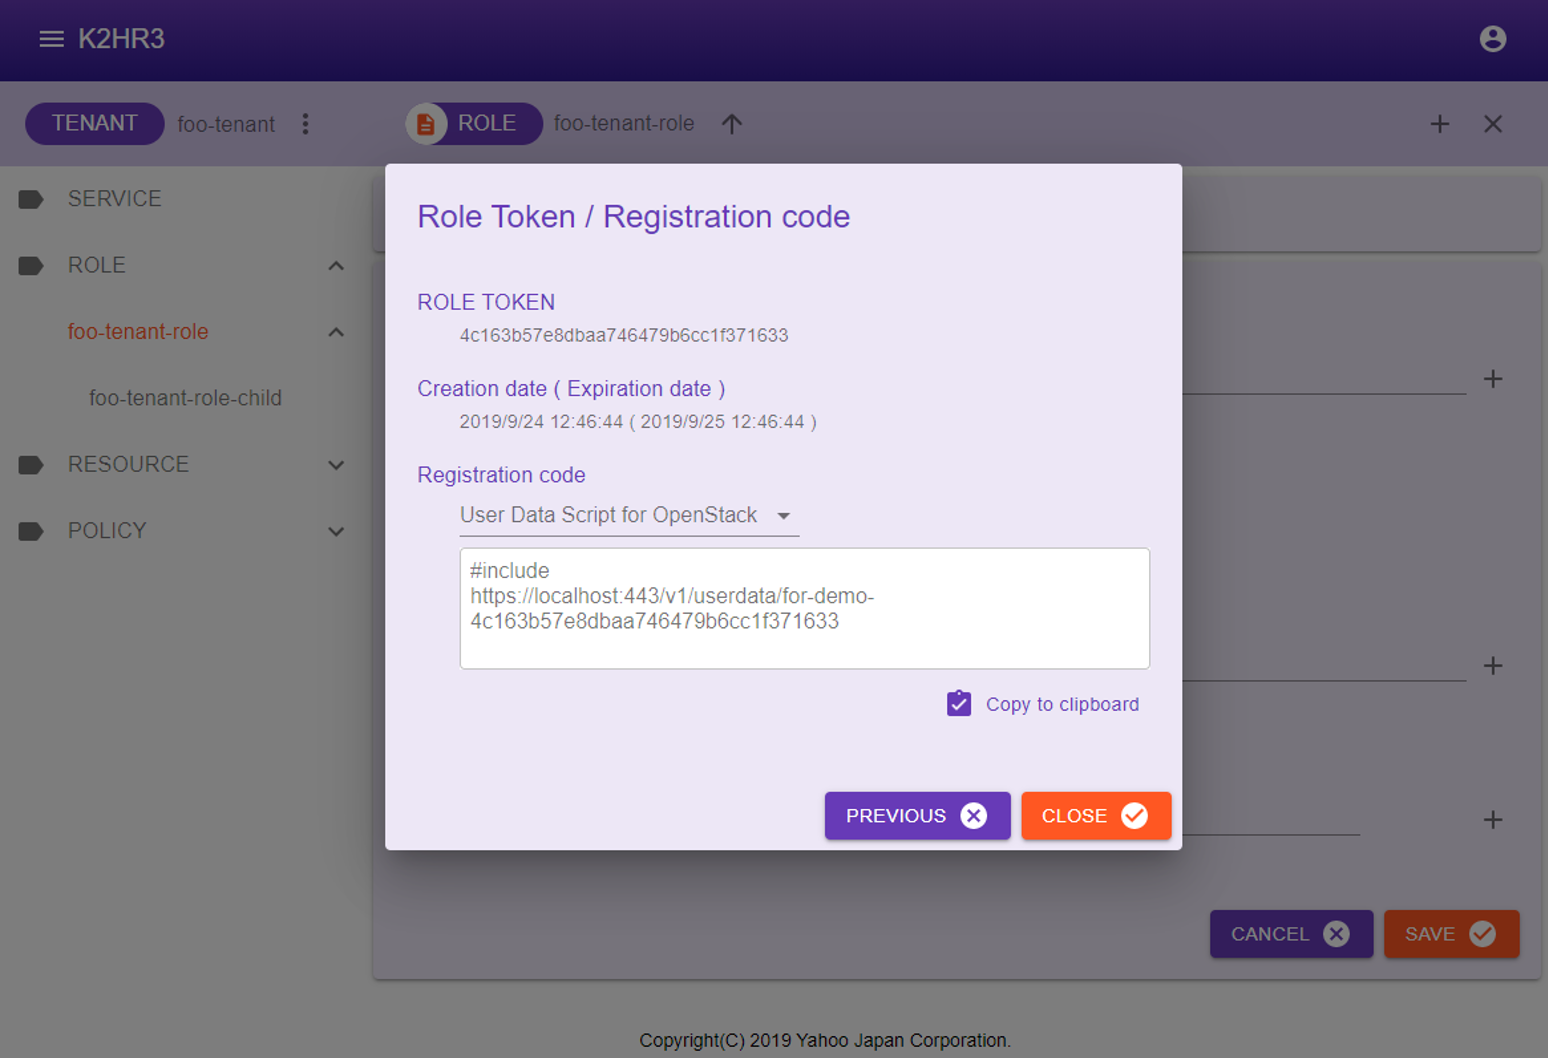 K2HR3 Usage Application - Role token detail and registration codes